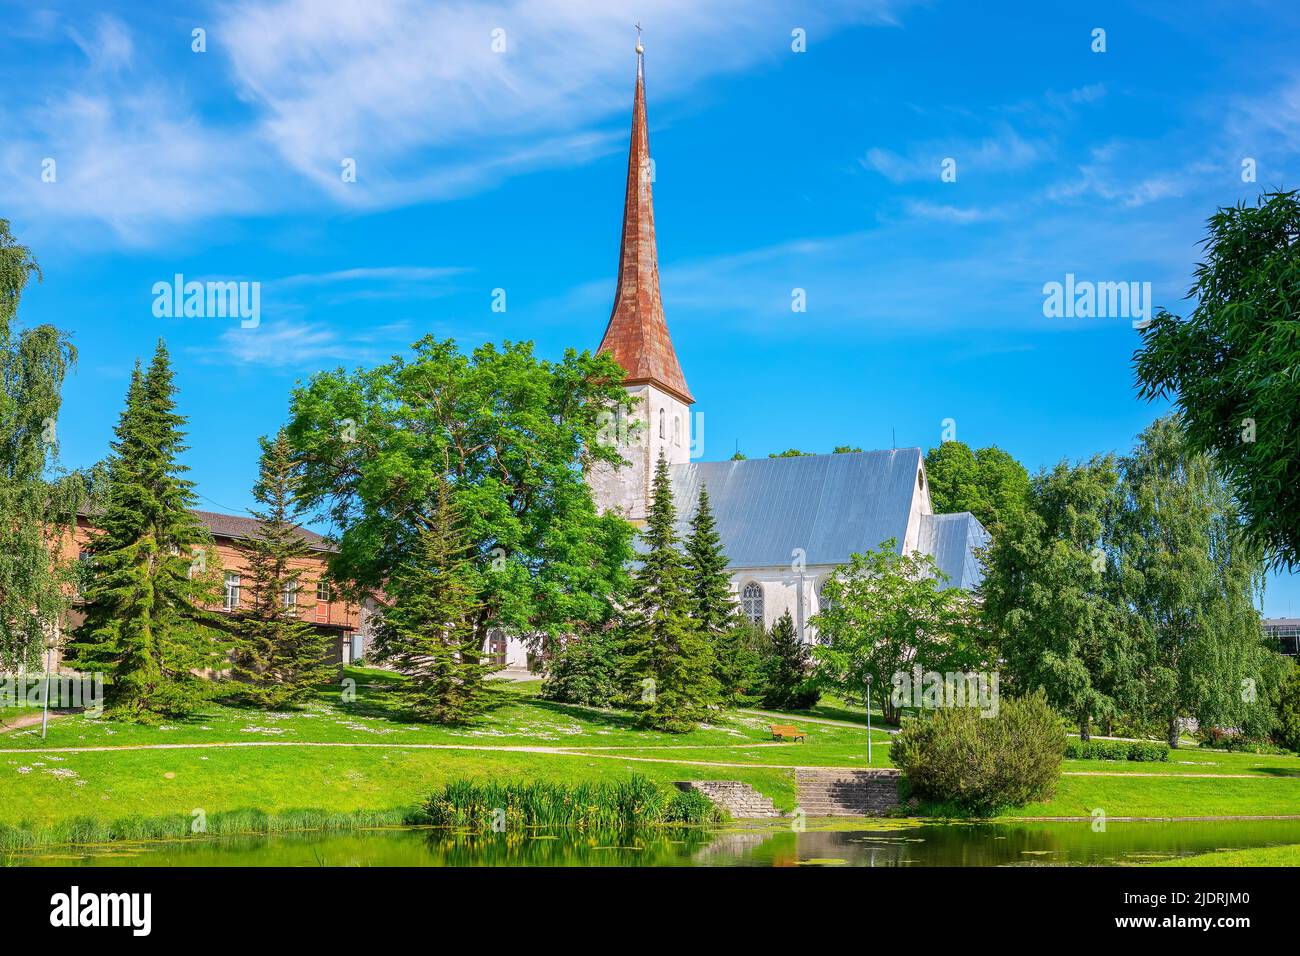 St. Trinity Church building and green park in Rakvere. Estonia, Baltic states Stock Photo